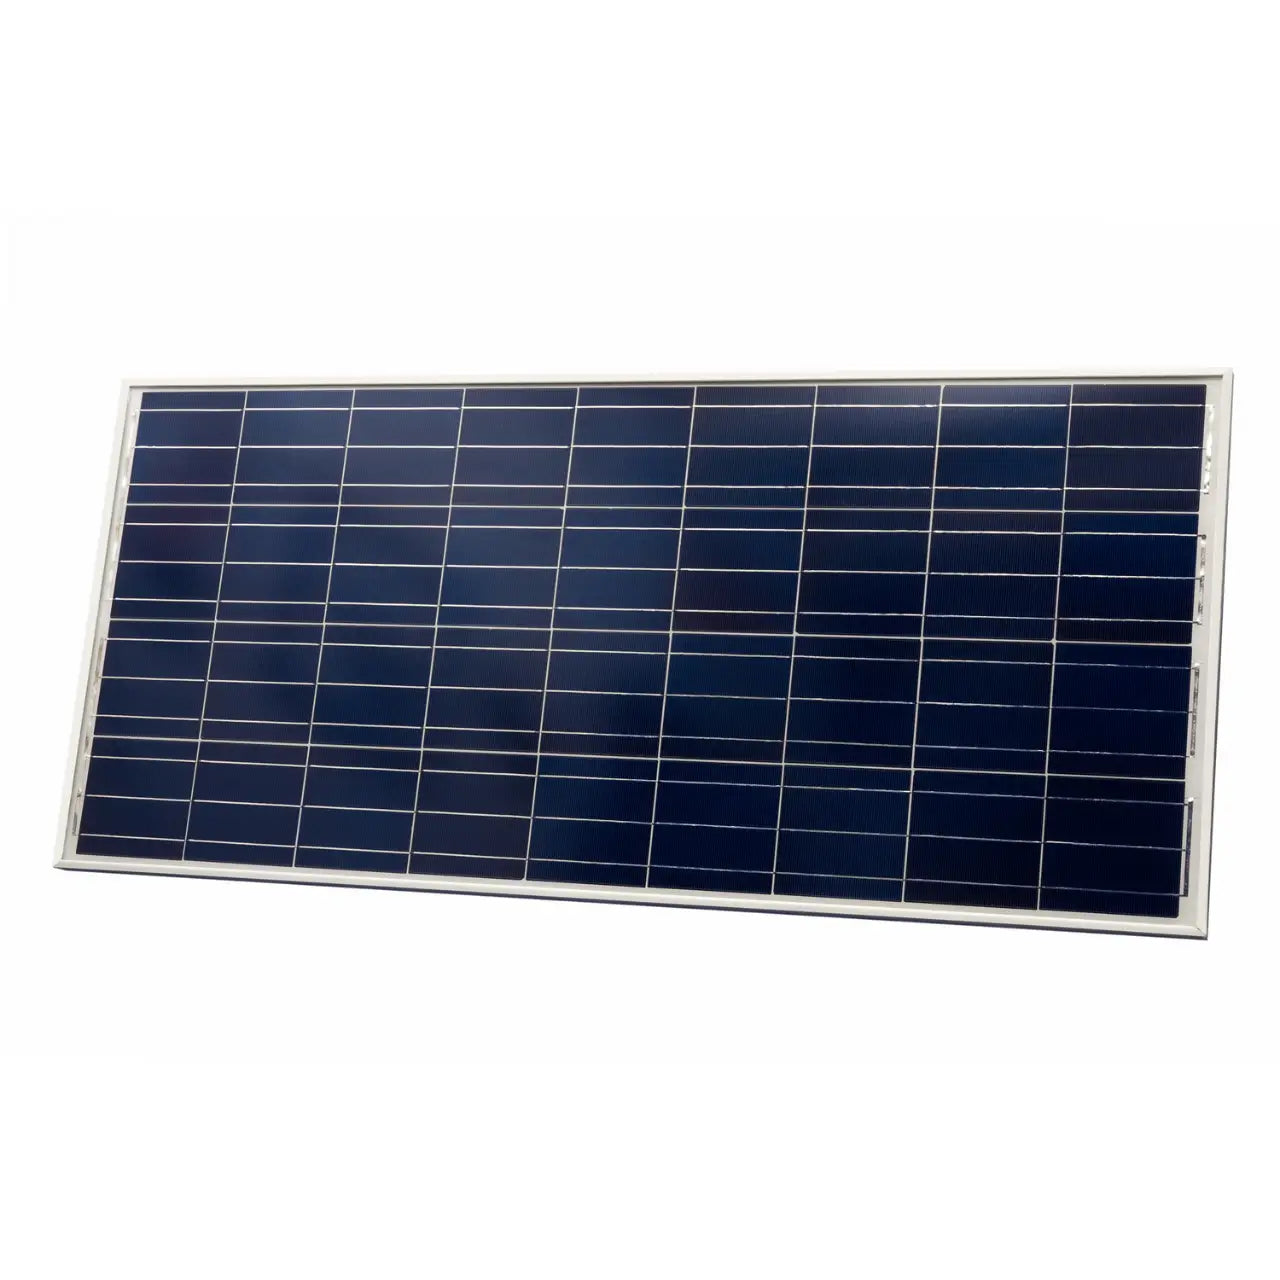 Victron Energy 24V 330W BlueSolar Polycrystalline Solar Panel